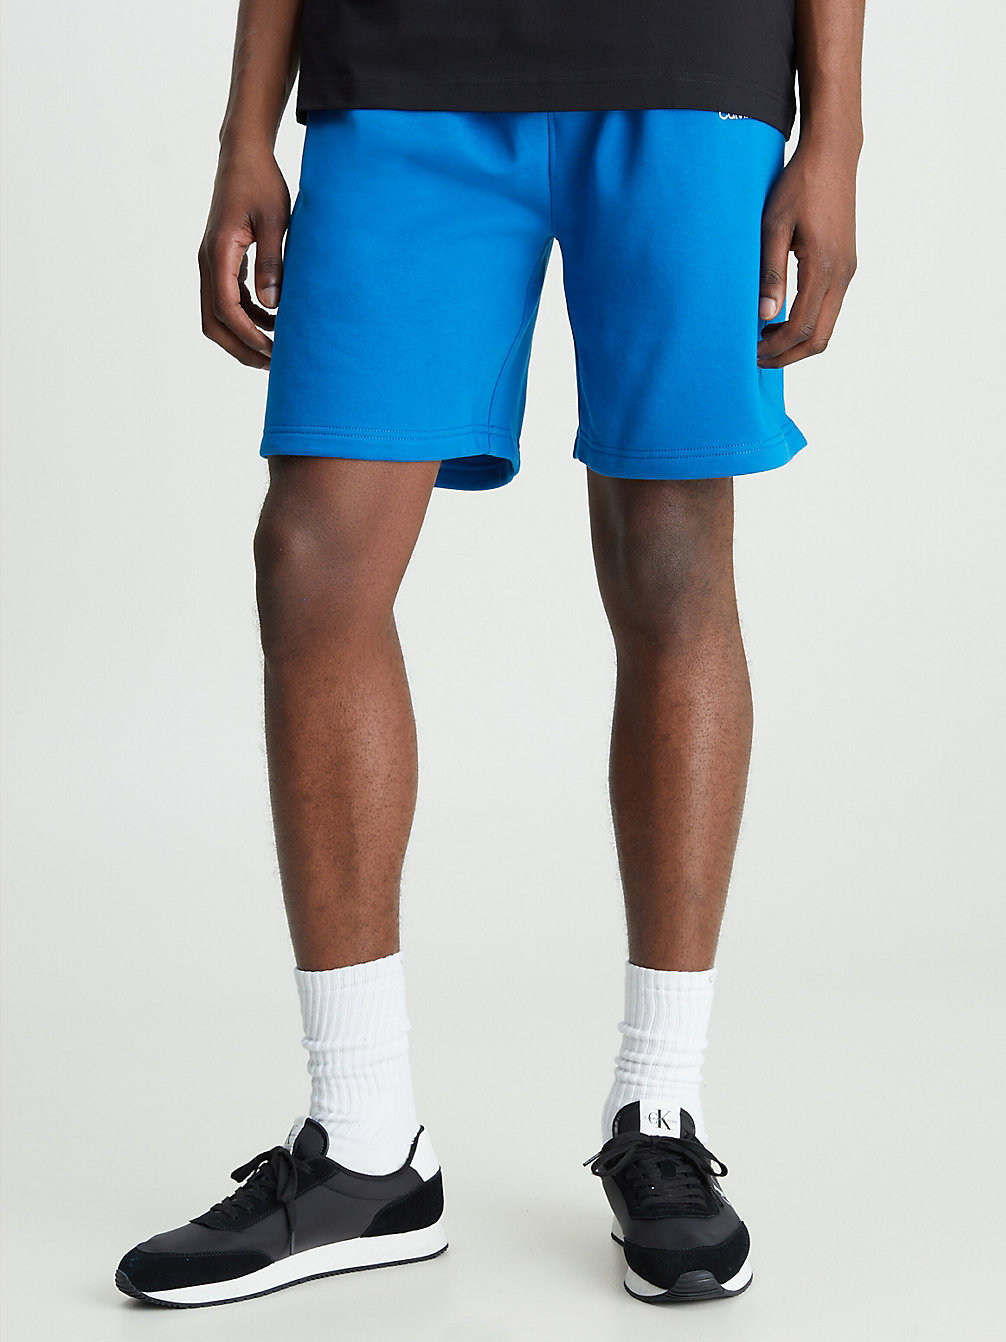 Men's Shorts | Denim, Chino & Cargo Shorts | Calvin Klein®